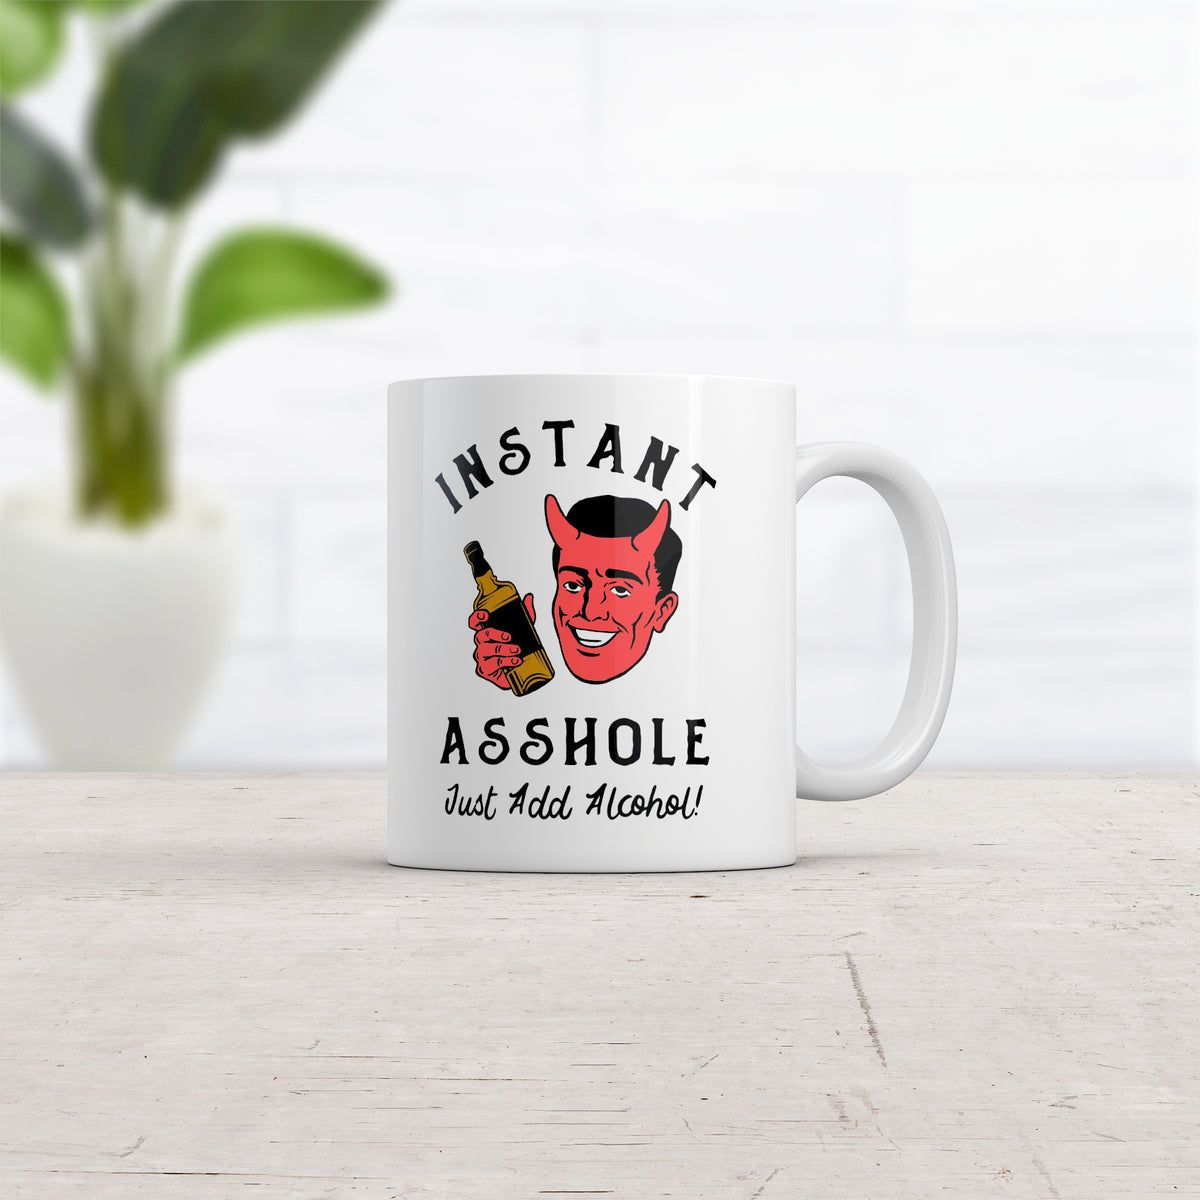 Instant Asshole Just Add Alcohol Mug